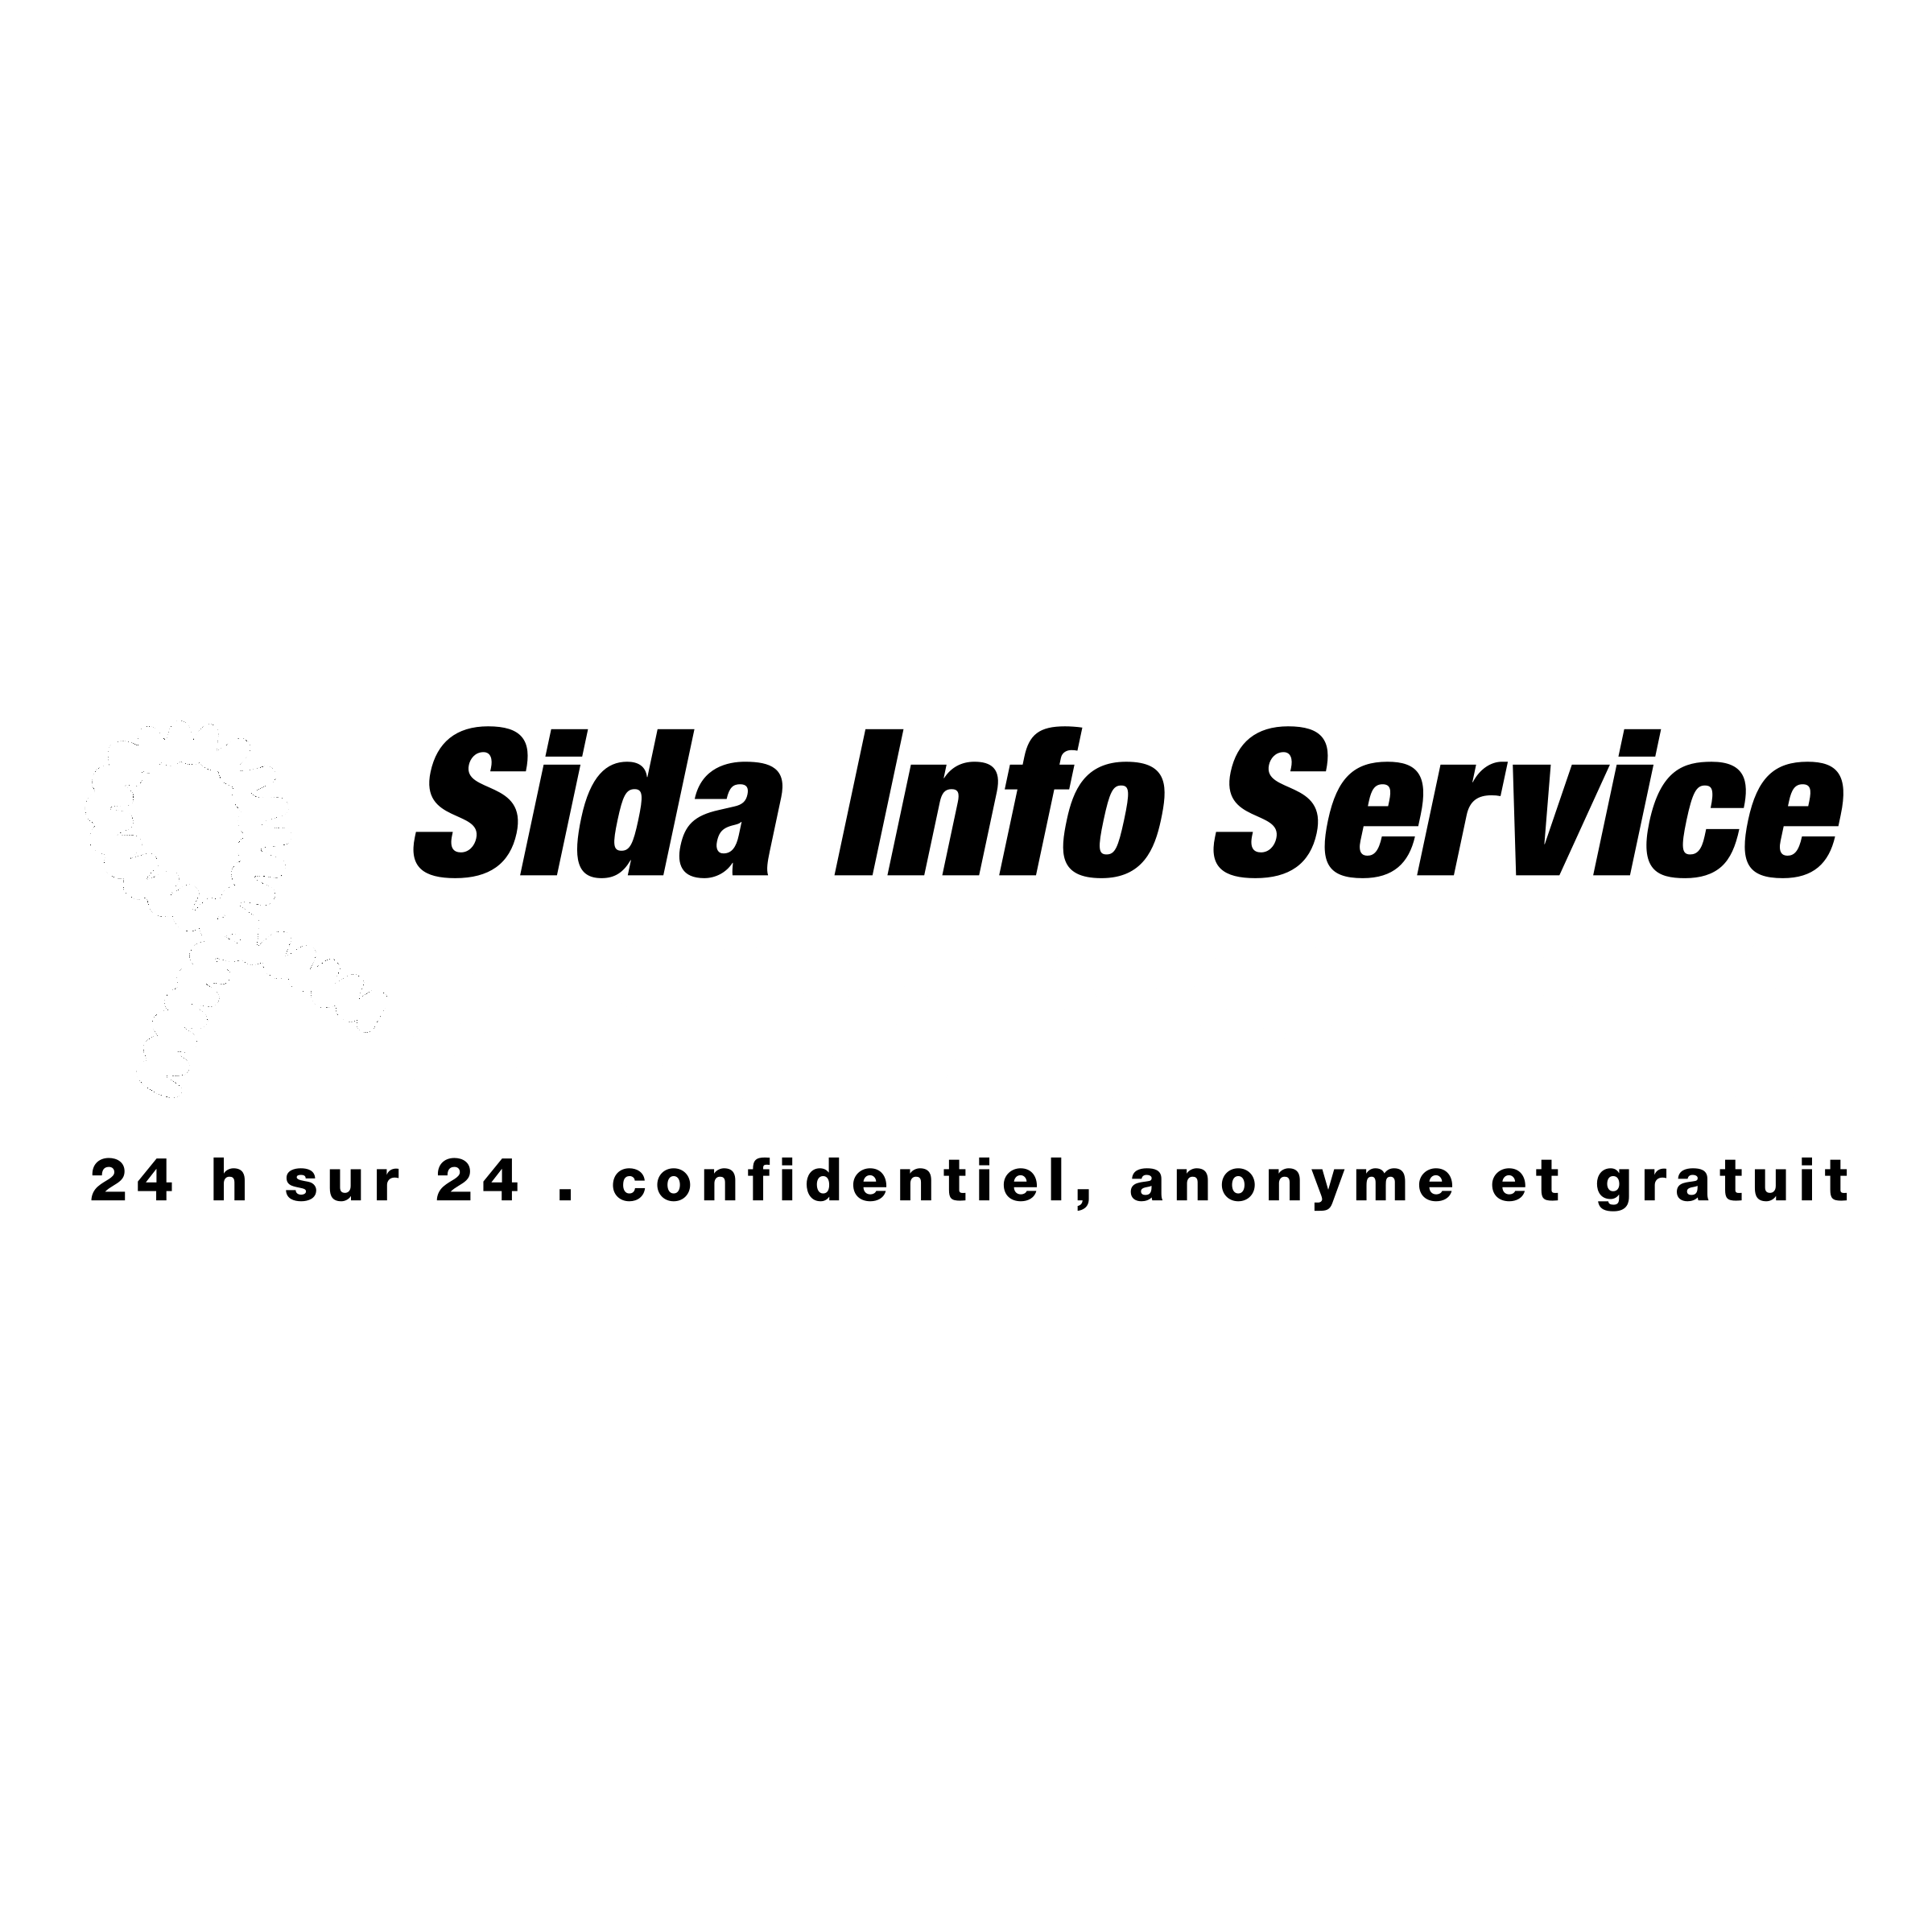 Sida Logo - Sida Info Service Logo PNG Transparent & SVG Vector